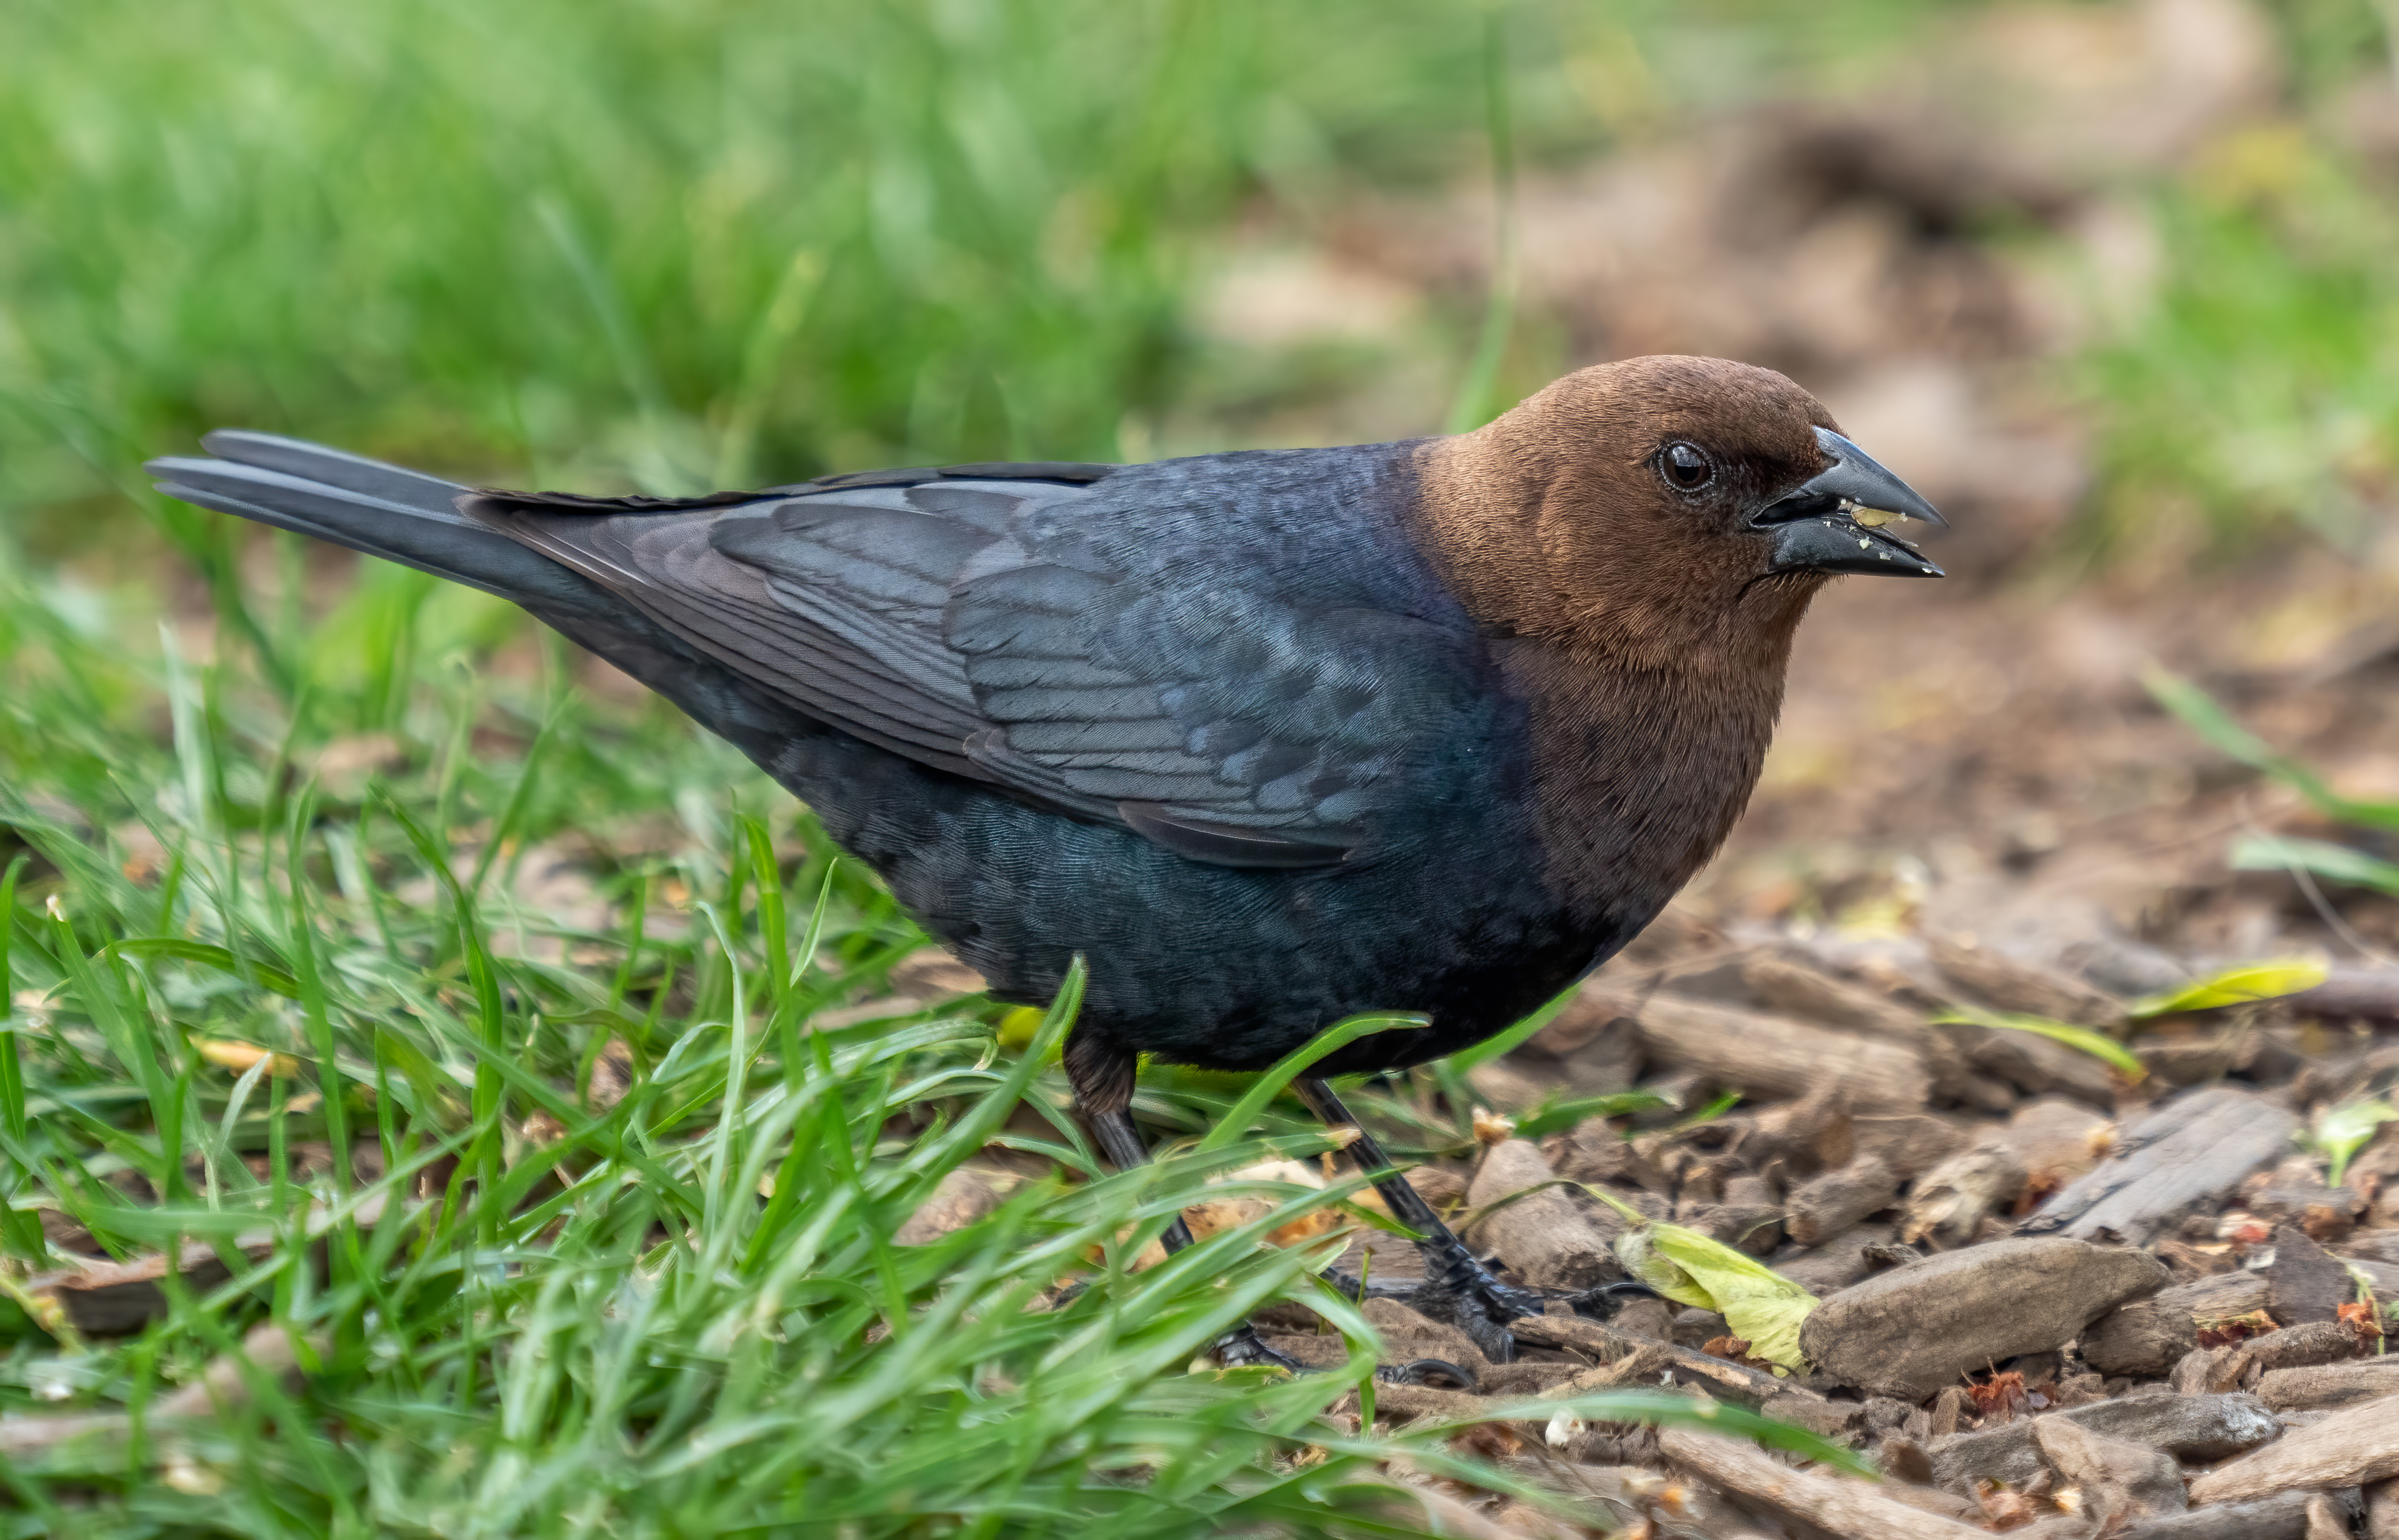 Handsome black songbird with brown head, black eye and beak feeds in short grass